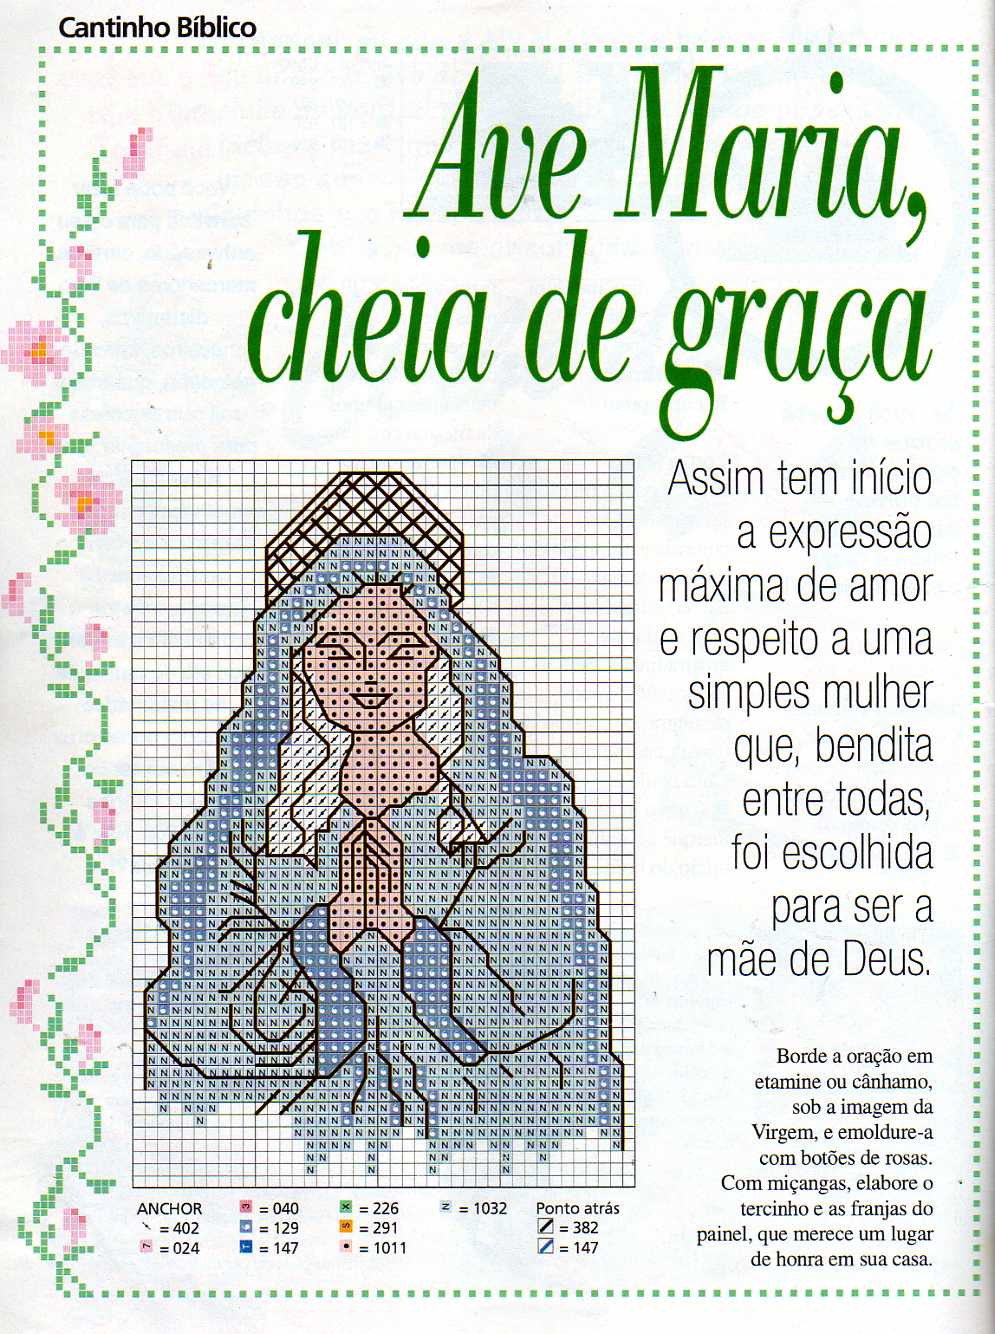 Madonna with prayer Hail Mary (2)